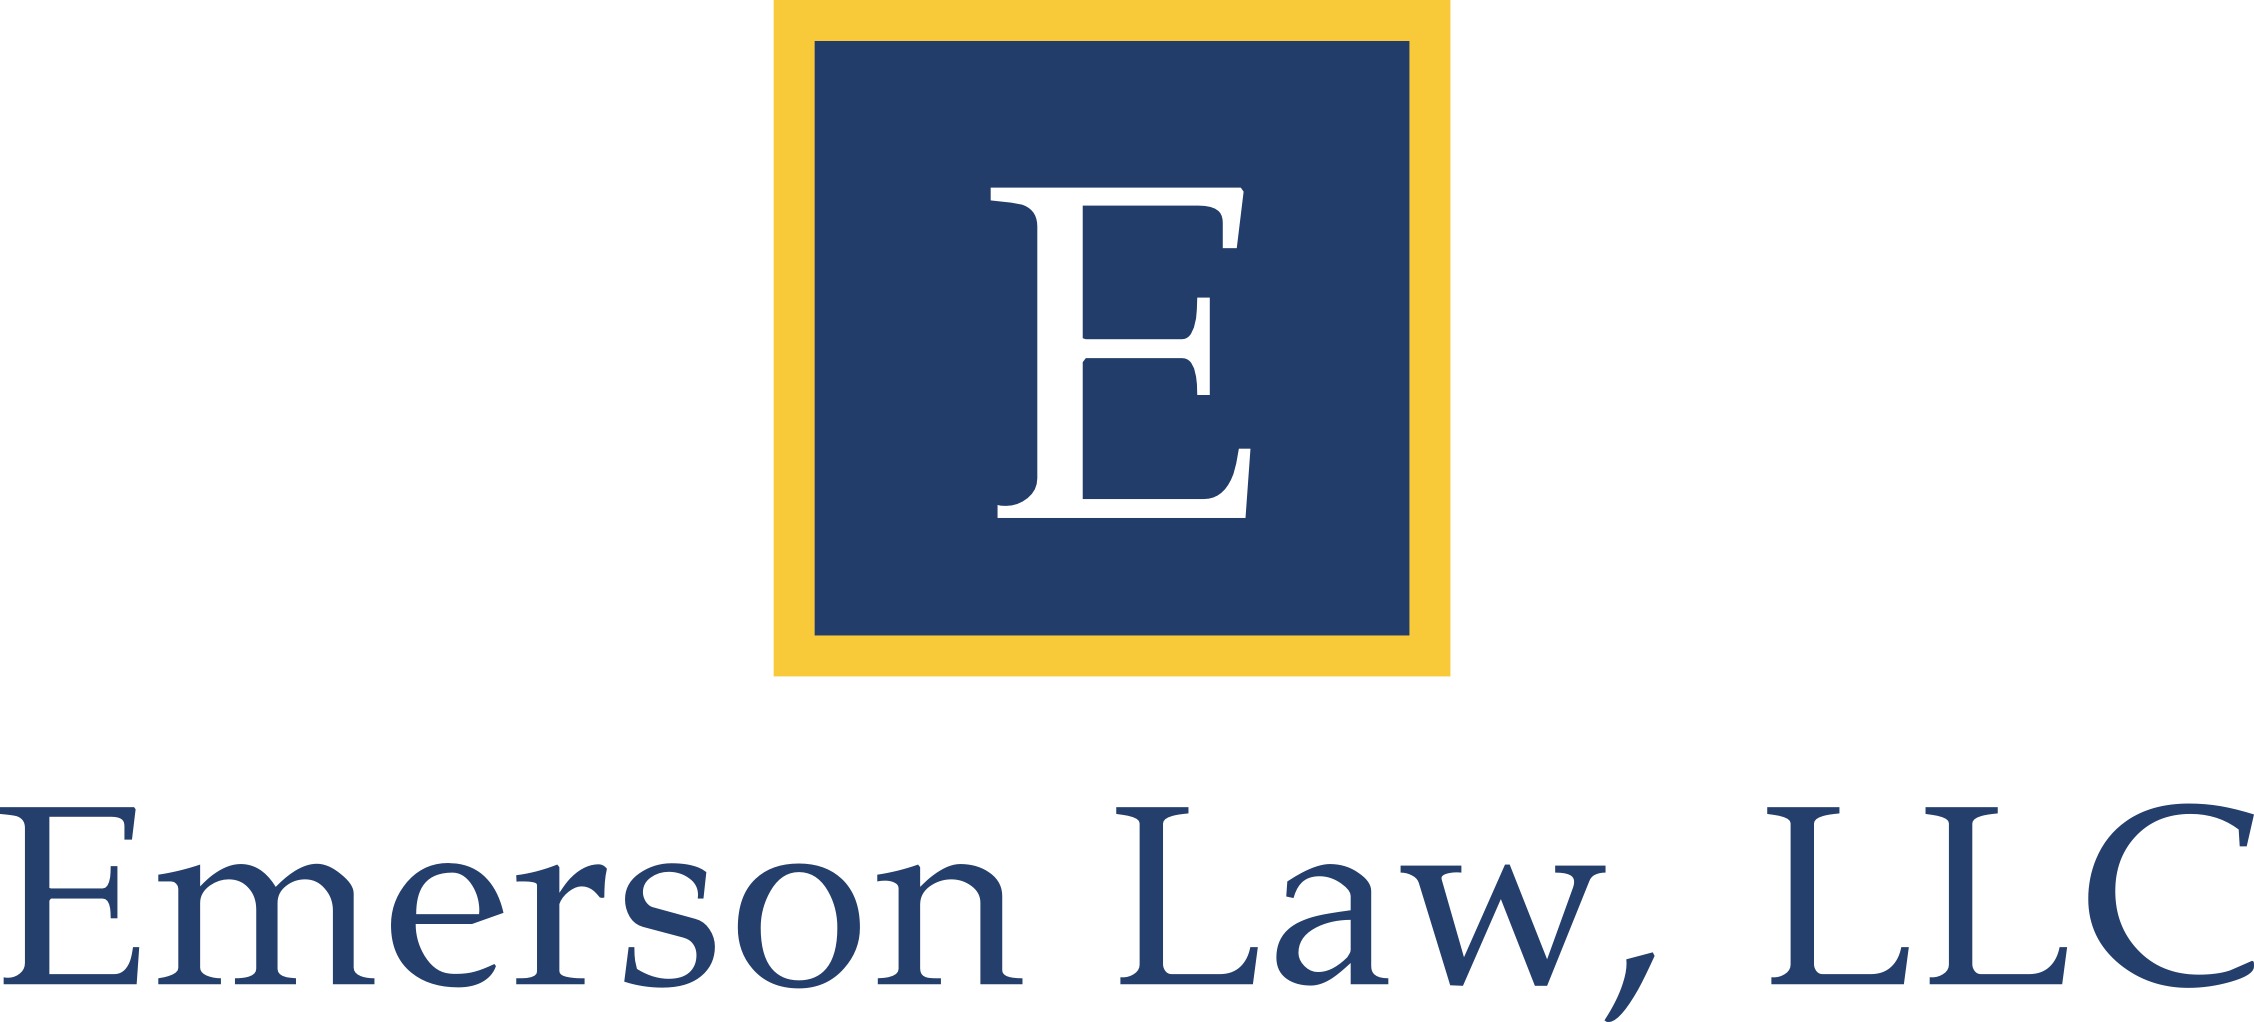 Emerson Law